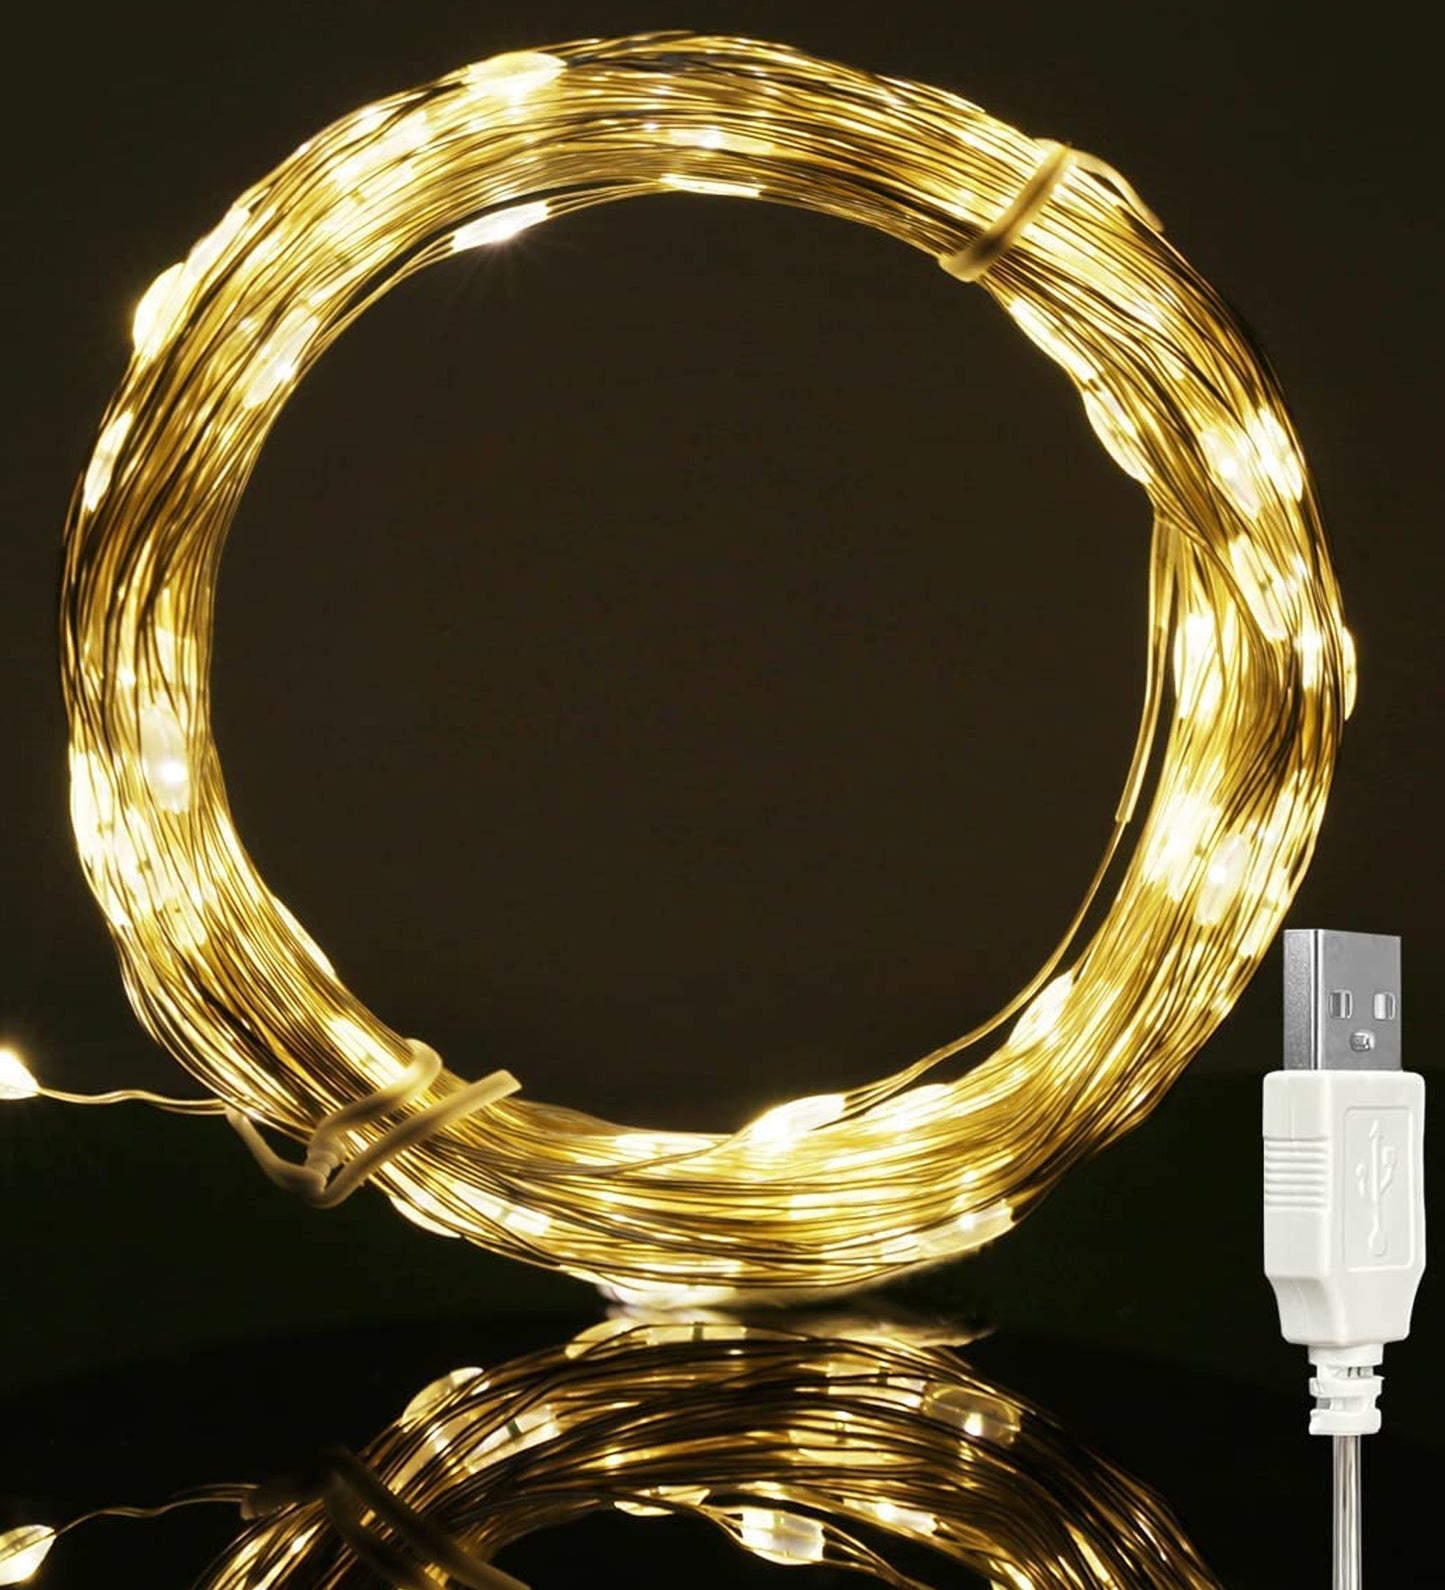 100-LED Fairy Copper String Lights 10m Waterproof, USB, Warm White